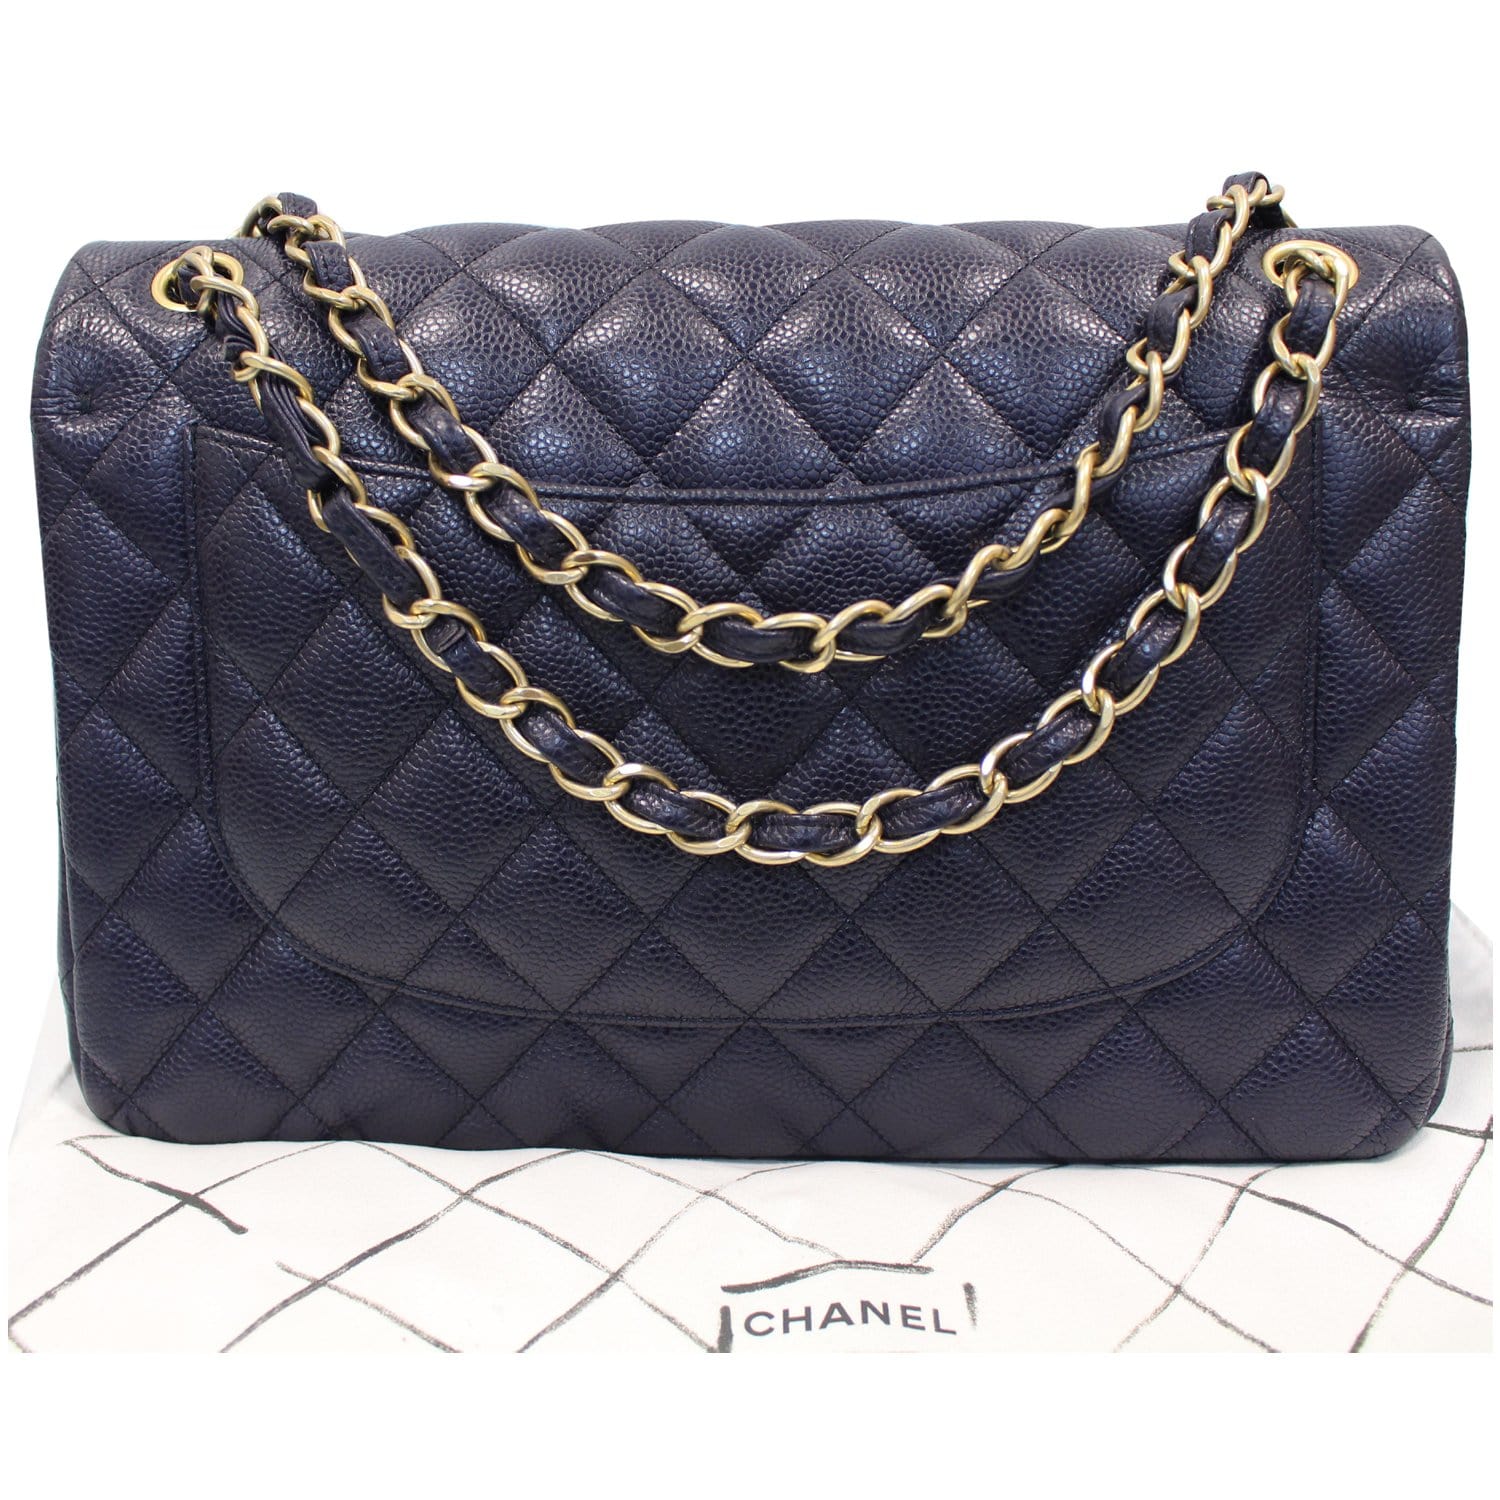 Chanel - Medium Double Flap Bag Caviar Navy Blue